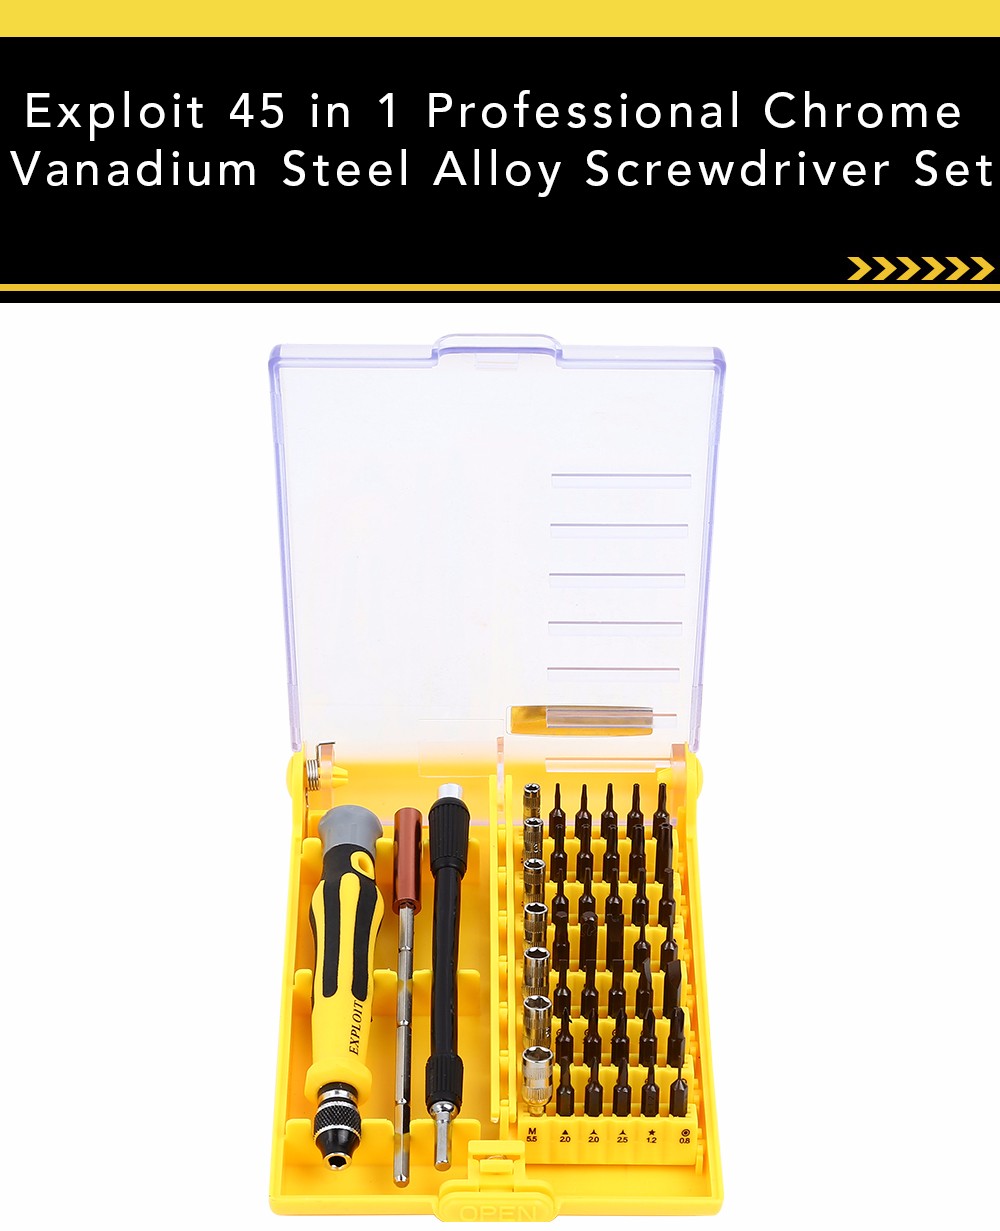 Exploit 45 in 1 Professional Chrome Vanadium Steel Alloy Screwdriver Set